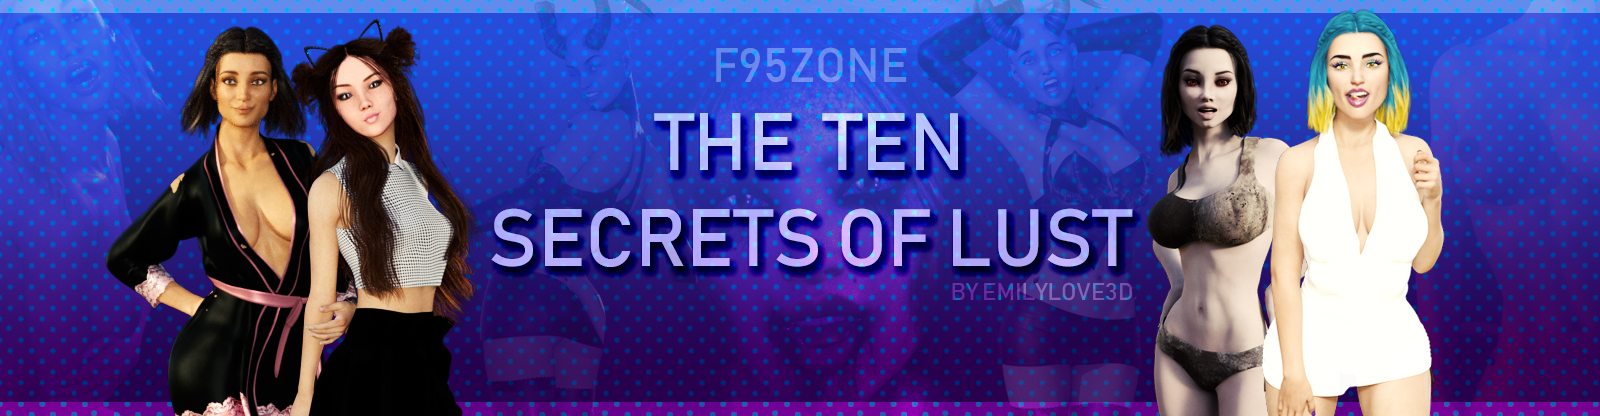 The Ten Secrets of Lust poster